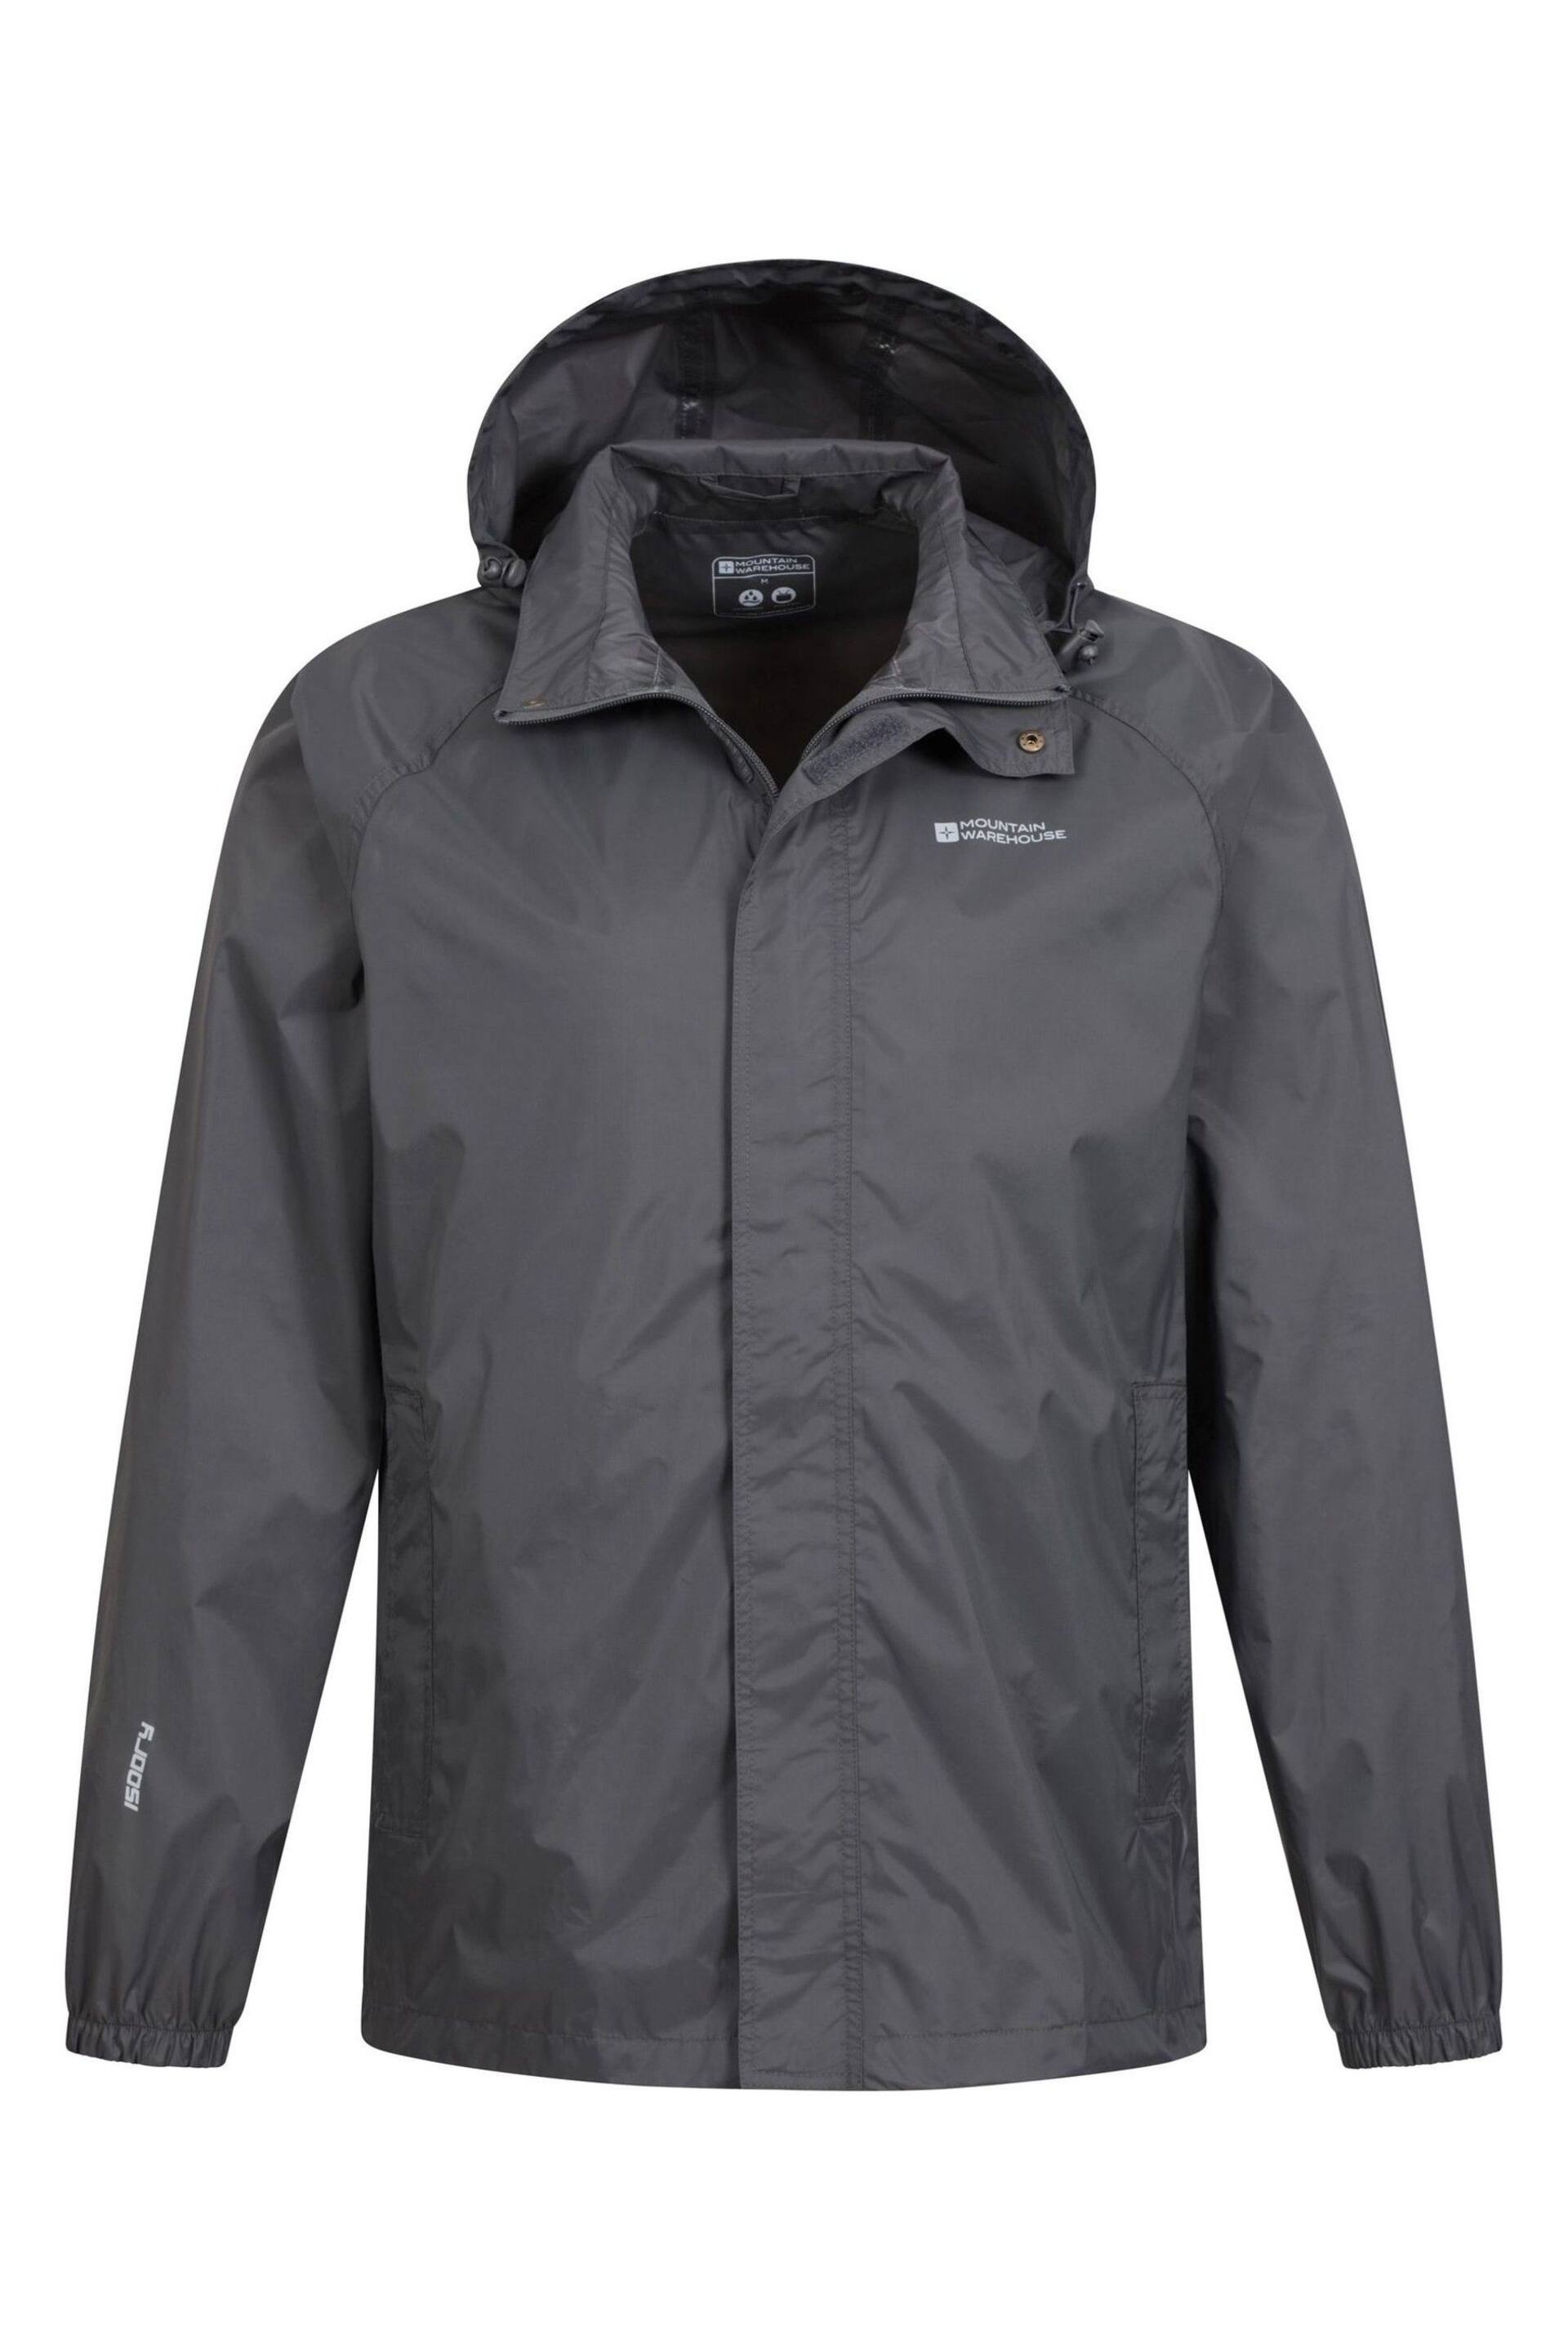 Mountain Warehouse Grey Pakka Waterproof Jacket - Mens - Image 5 of 5